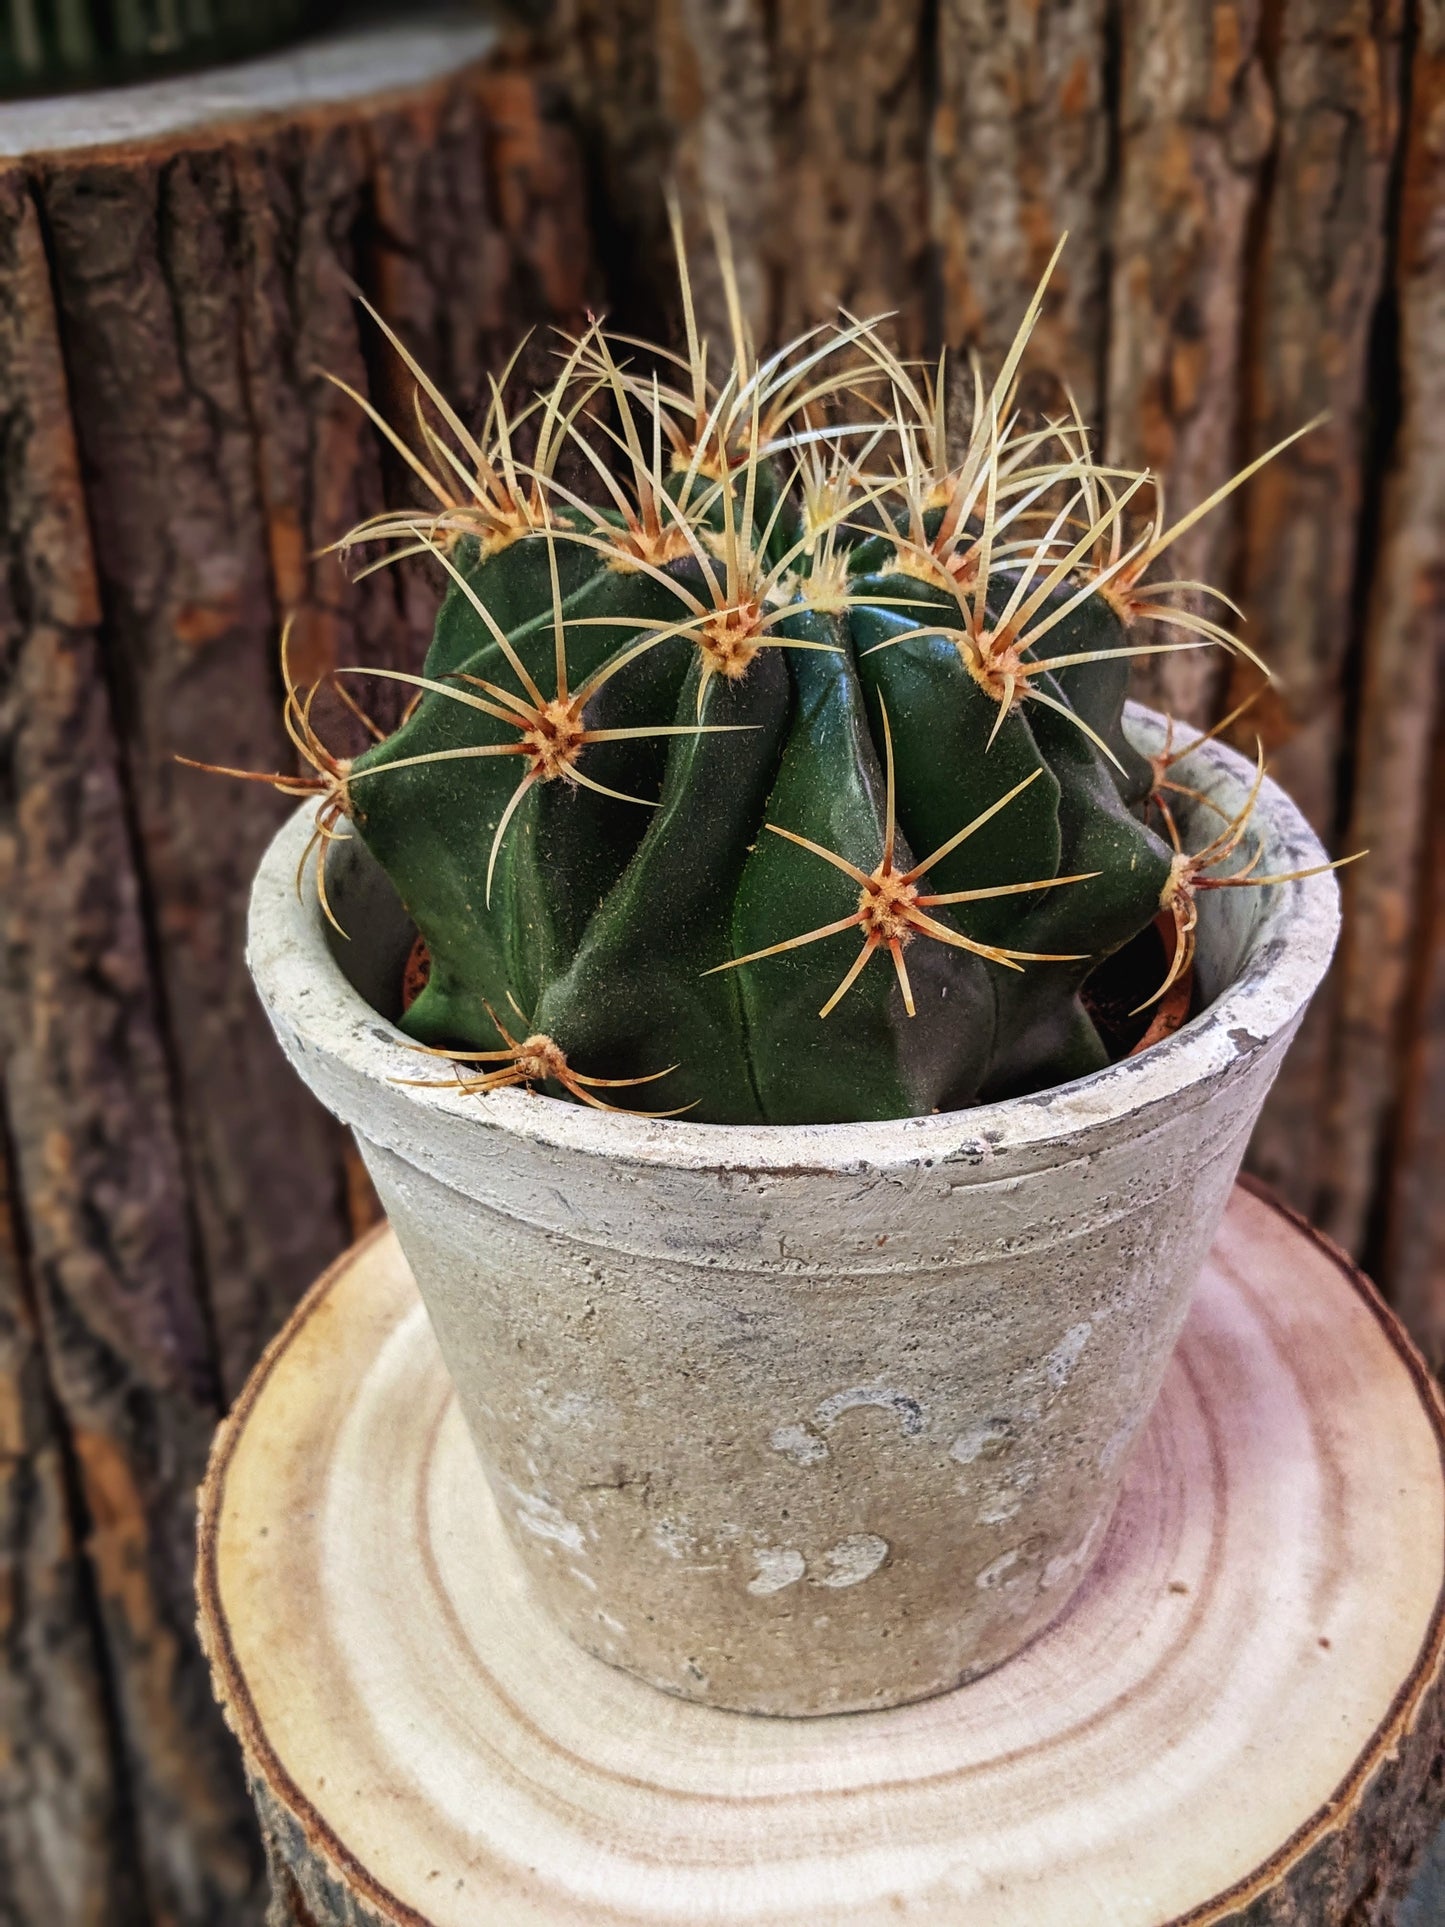 Thorny (Cactus)